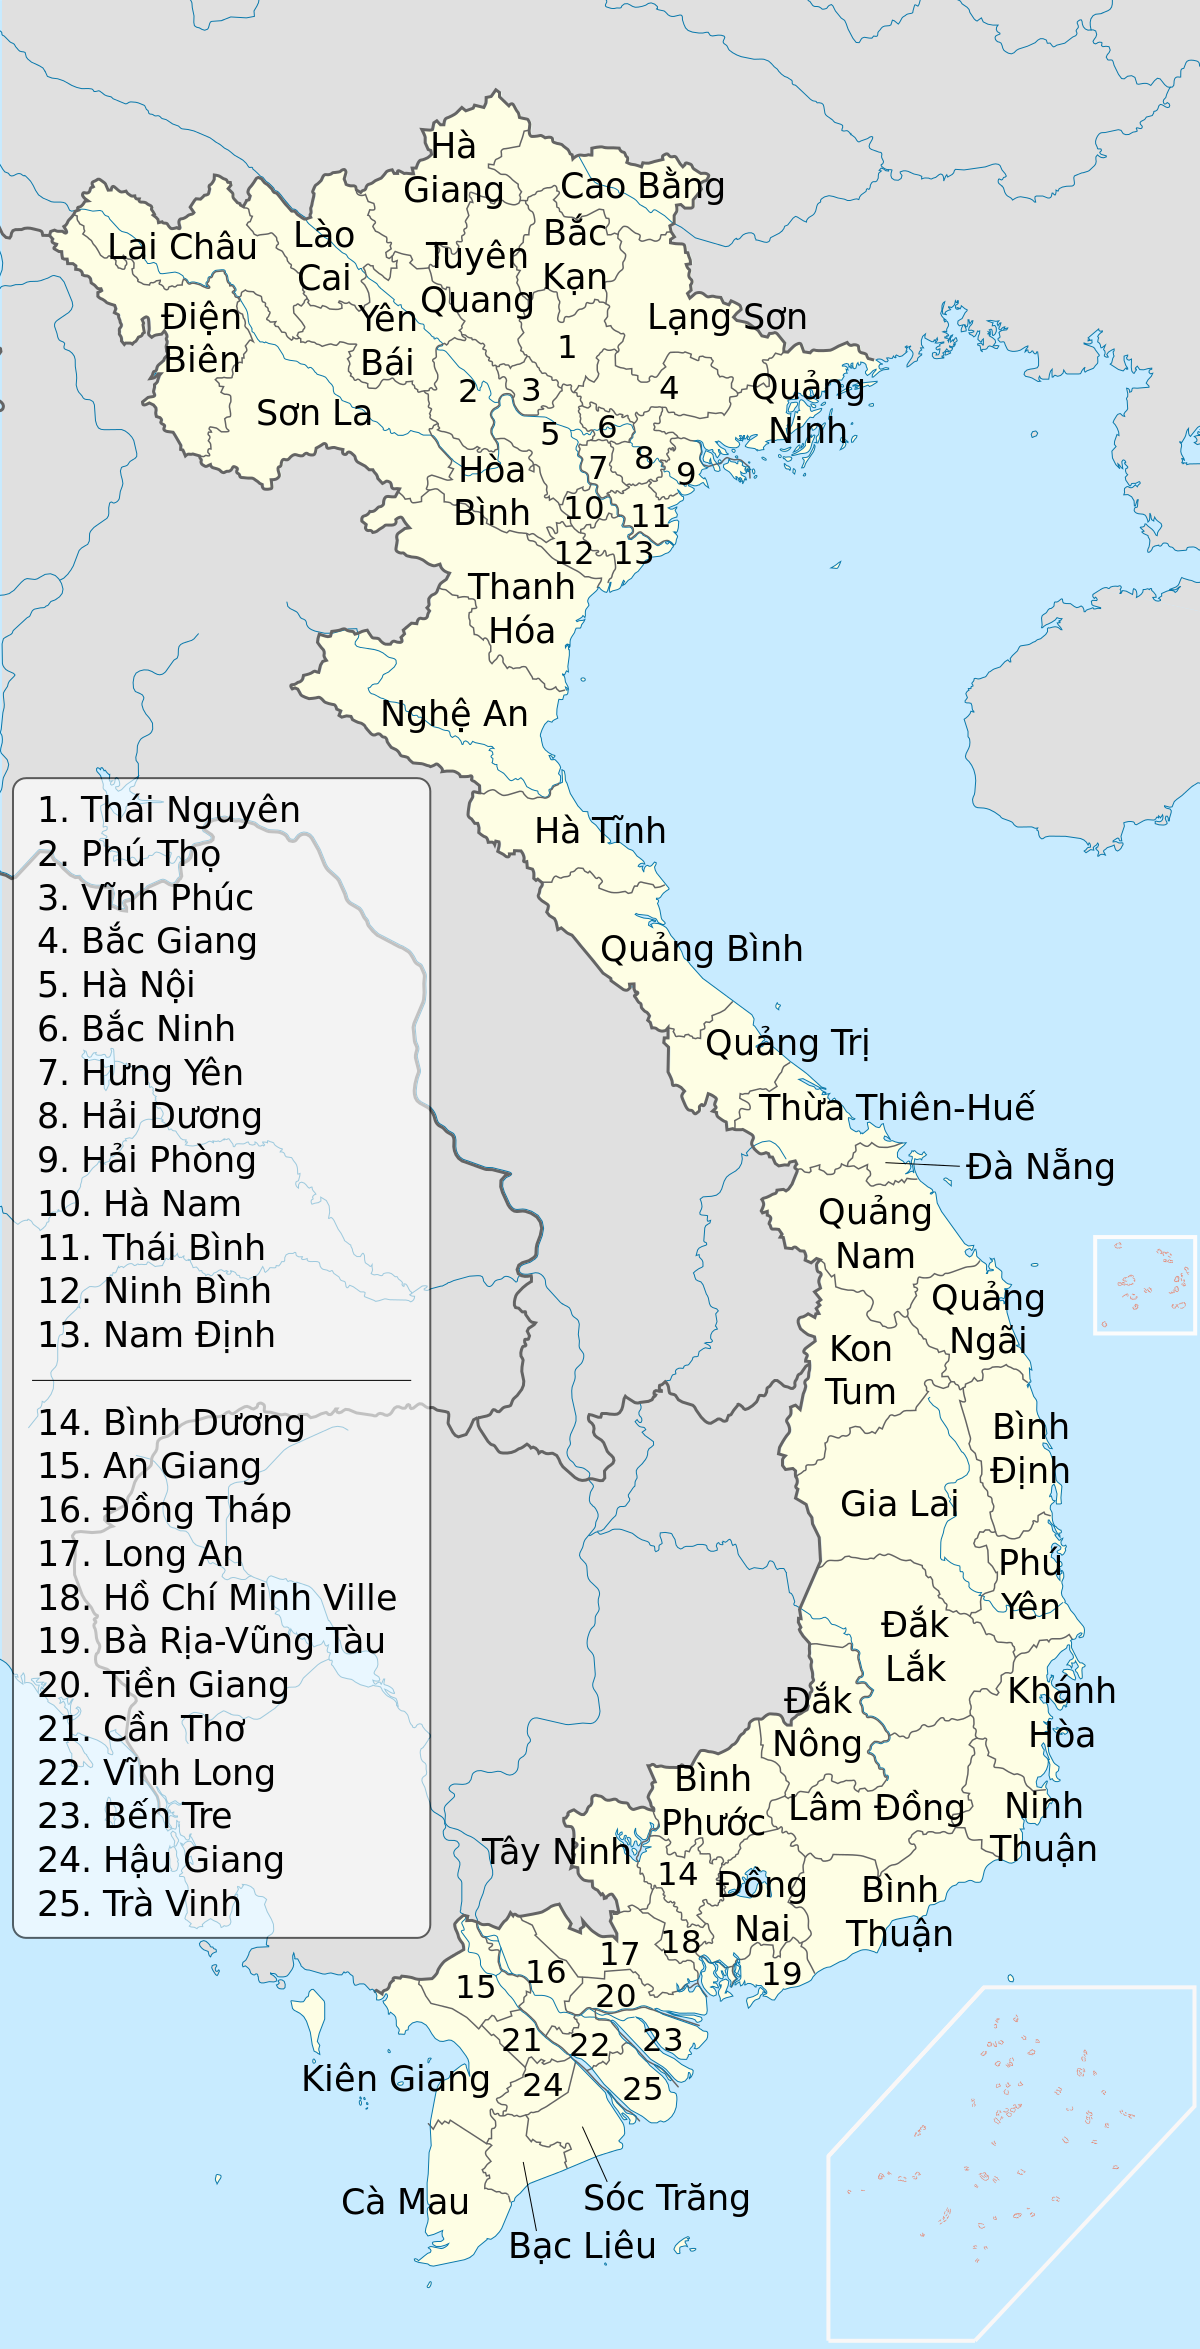 Ban Do Viet Nam Vietnam Map Phat Trien Viet Nam Phattrienvietnamcom Images